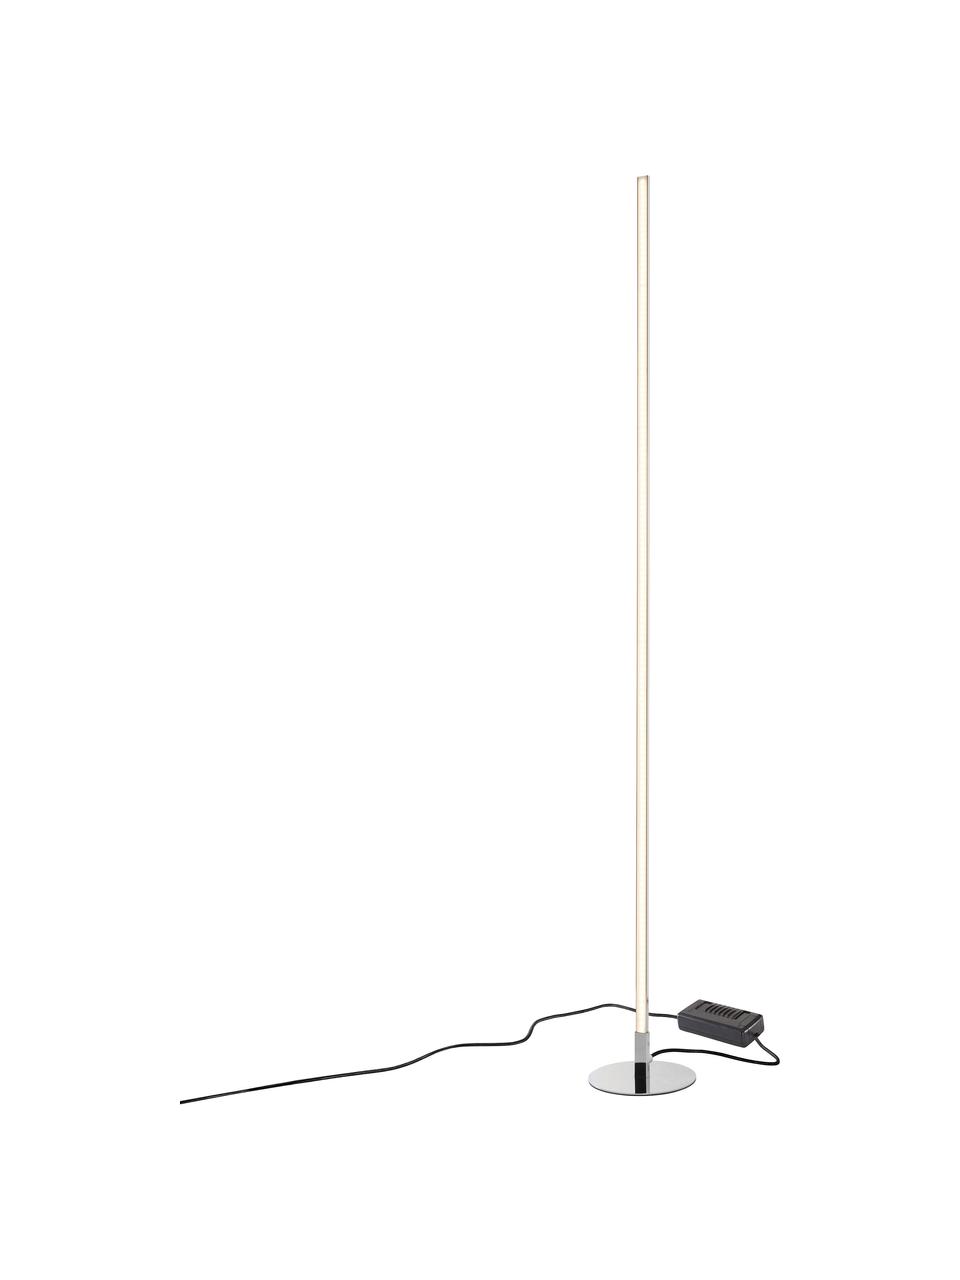 Kleine Dimmbare LED-Stehlampe Whisper in Silber, Silberfarben, Ø 15 x H 125 cm